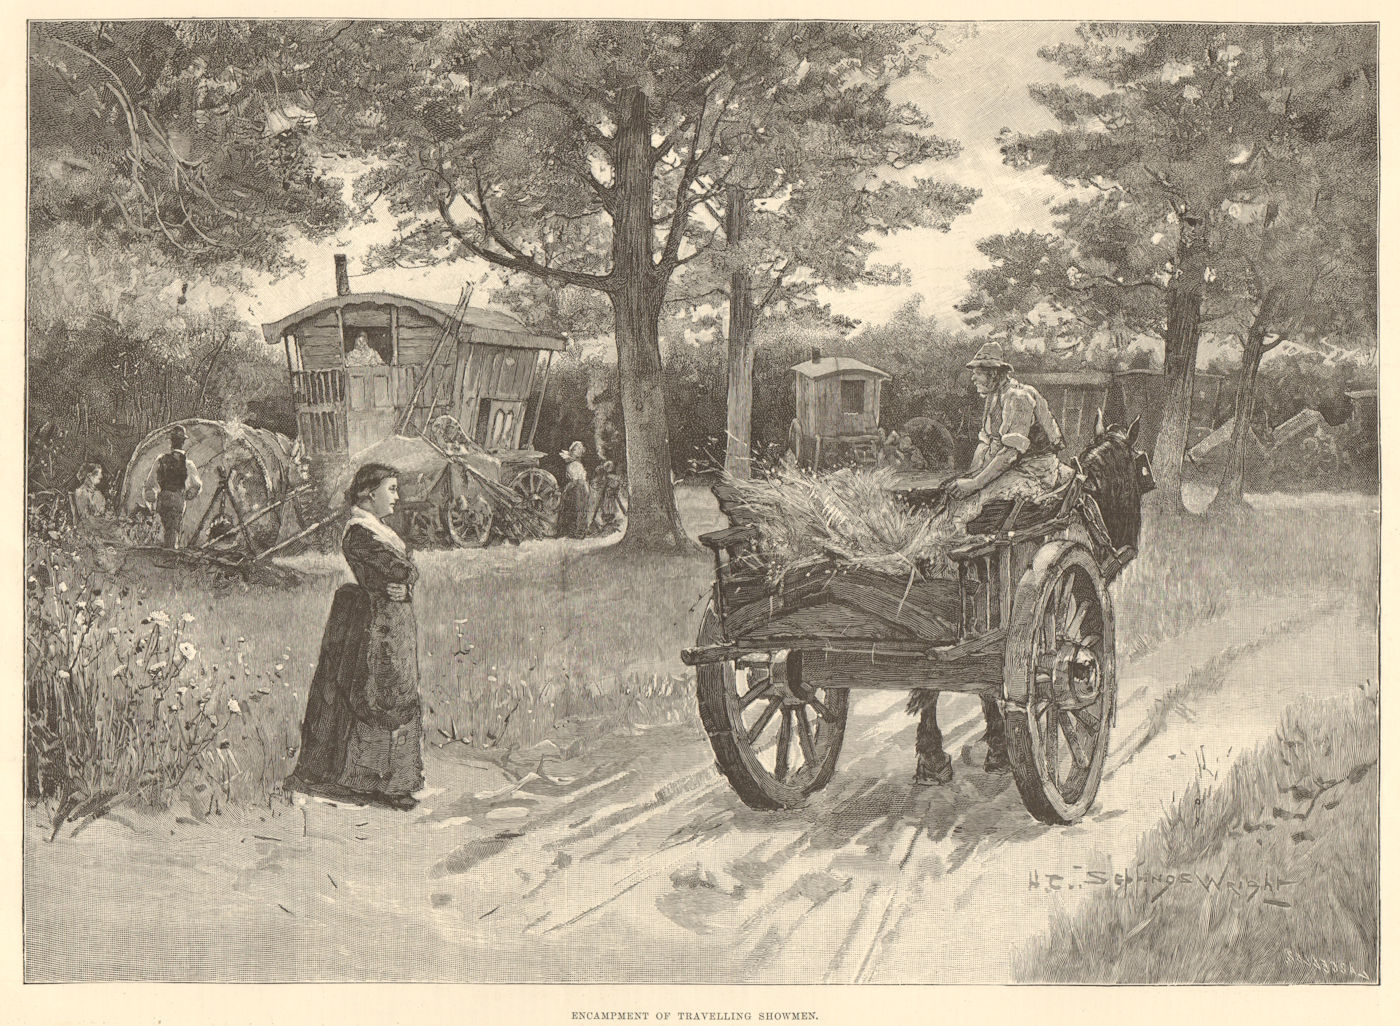 Associate Product Encampment of travelling showmen. Transport. Transport 1891 antique ILN page